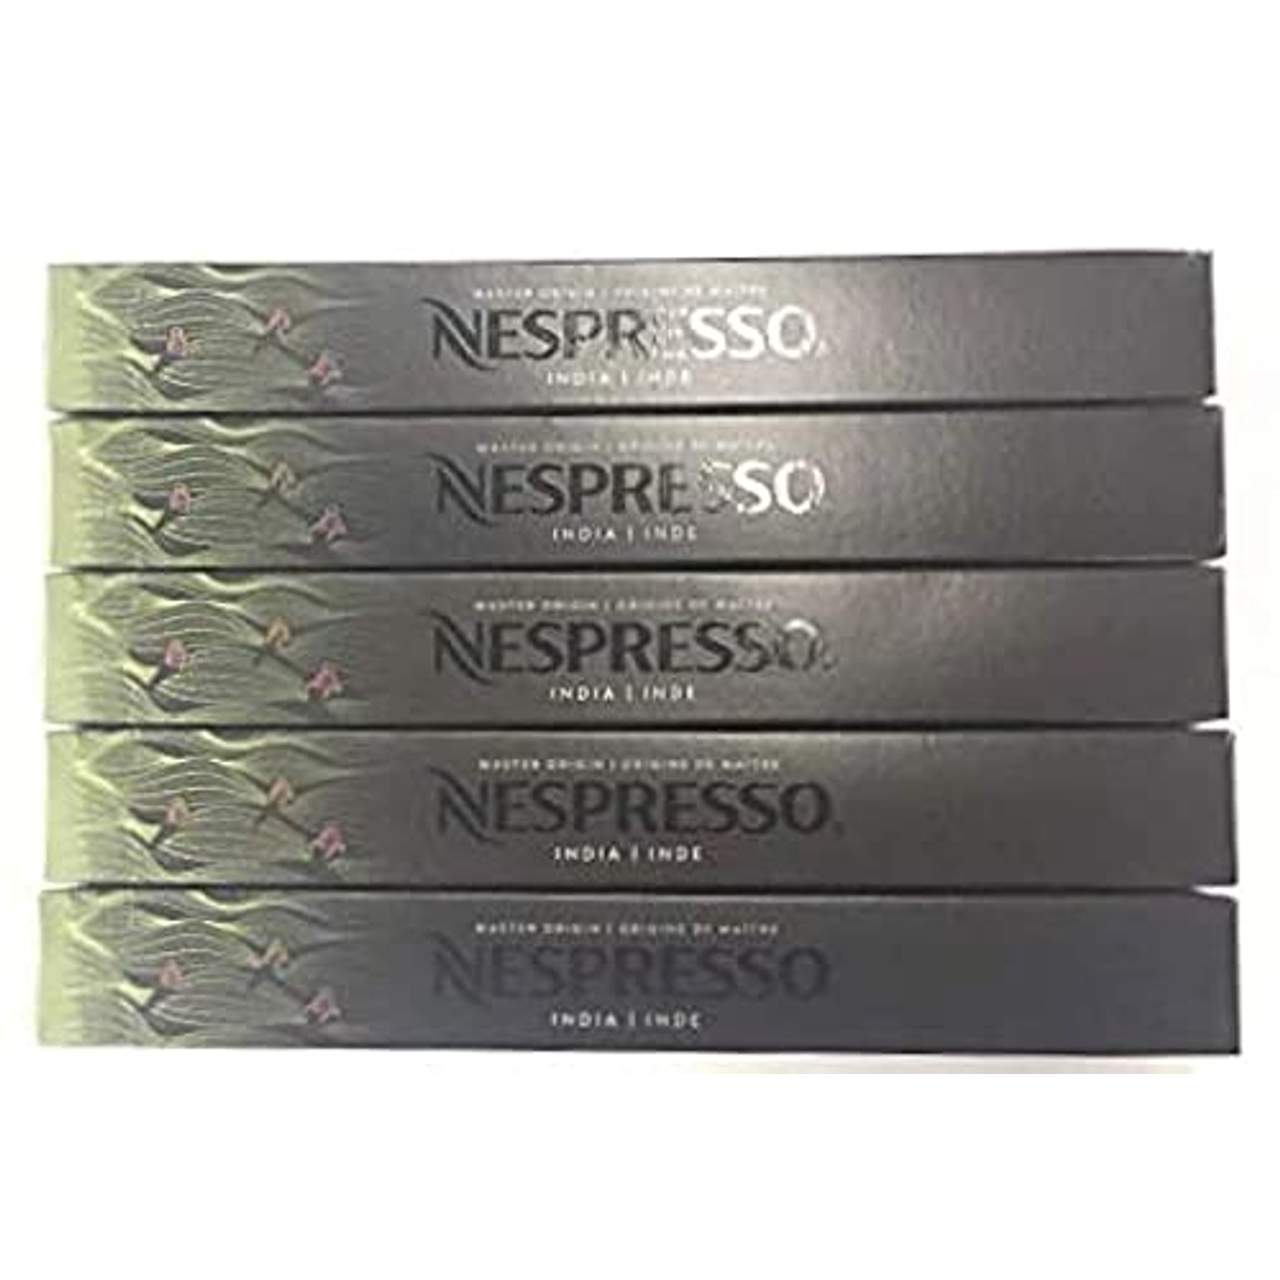 Nespresso Sortiment Indriya from India